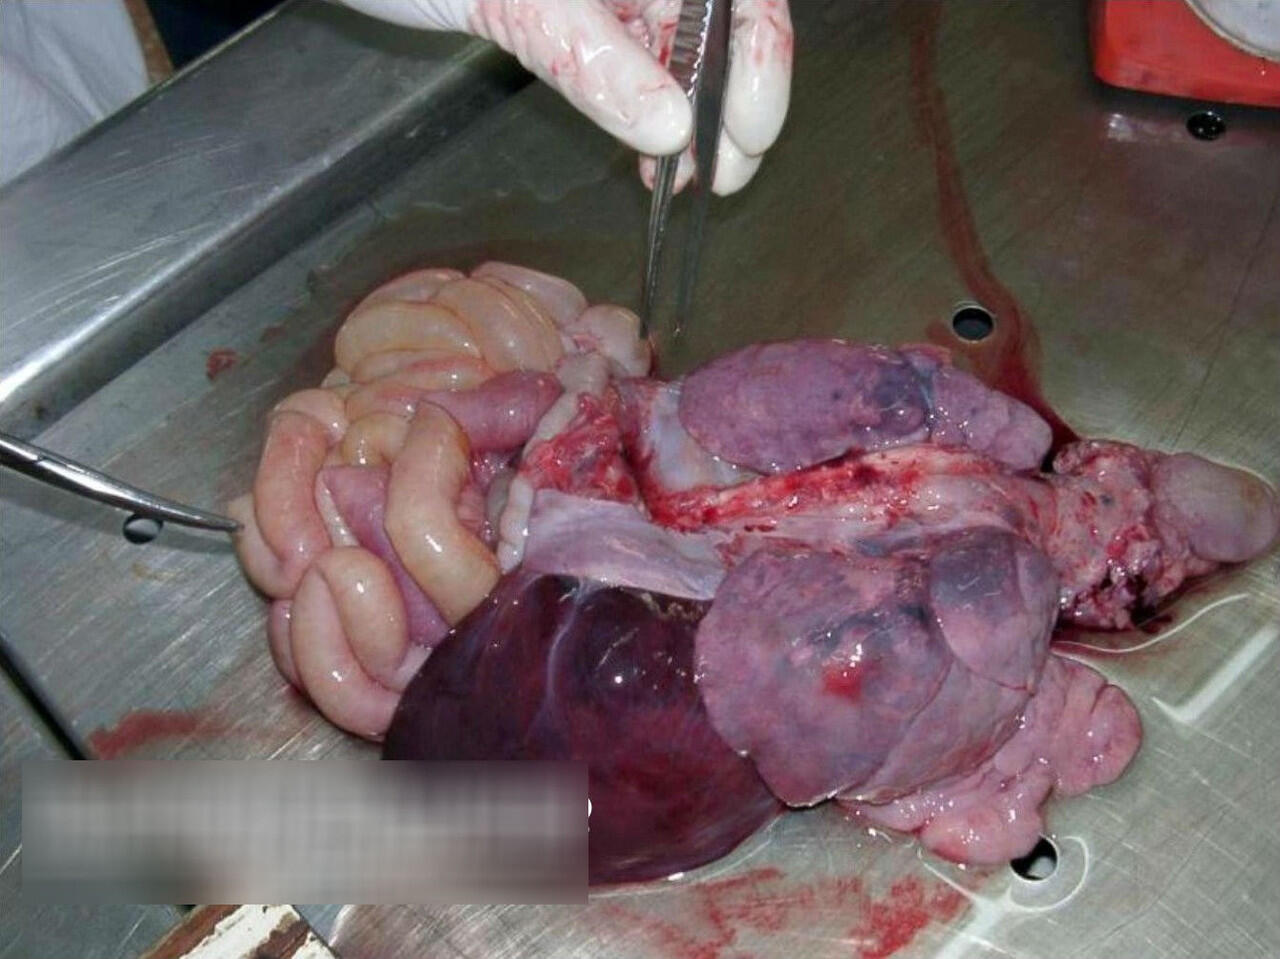 Baby boy autopsy